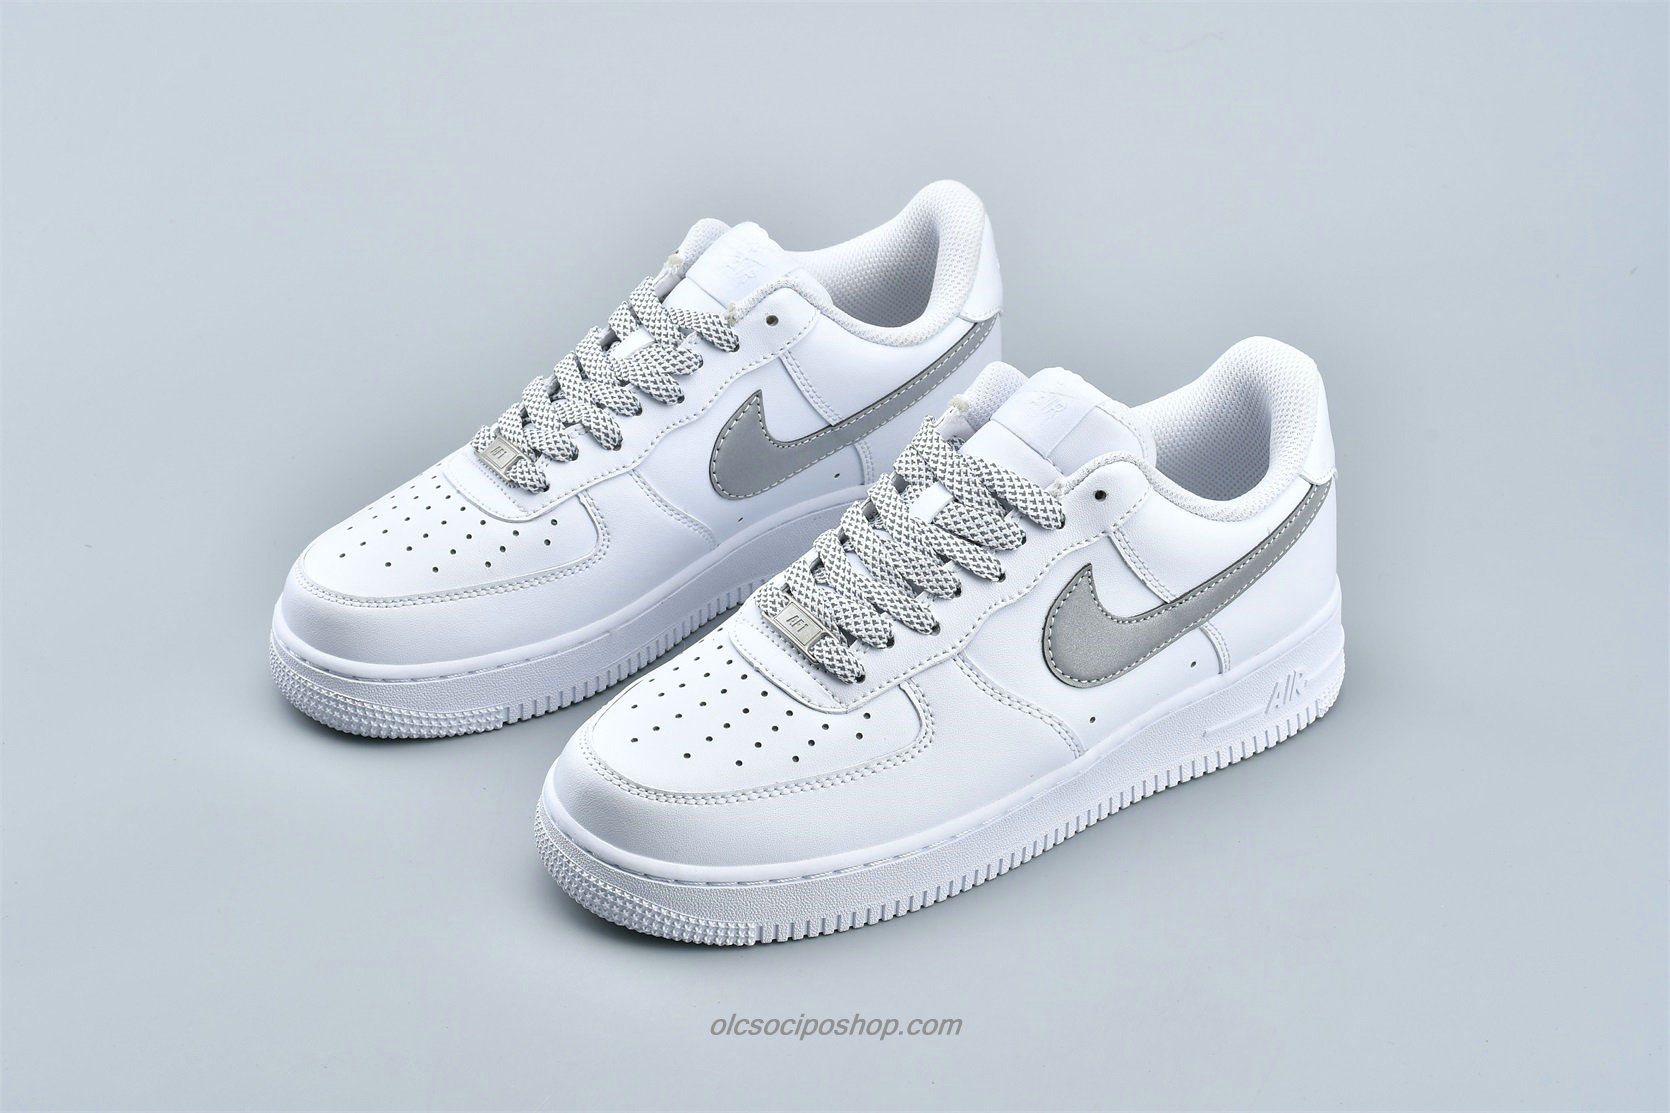 Nike Air Force 1 07 Fehér/Szürke Cipők (315115 112)